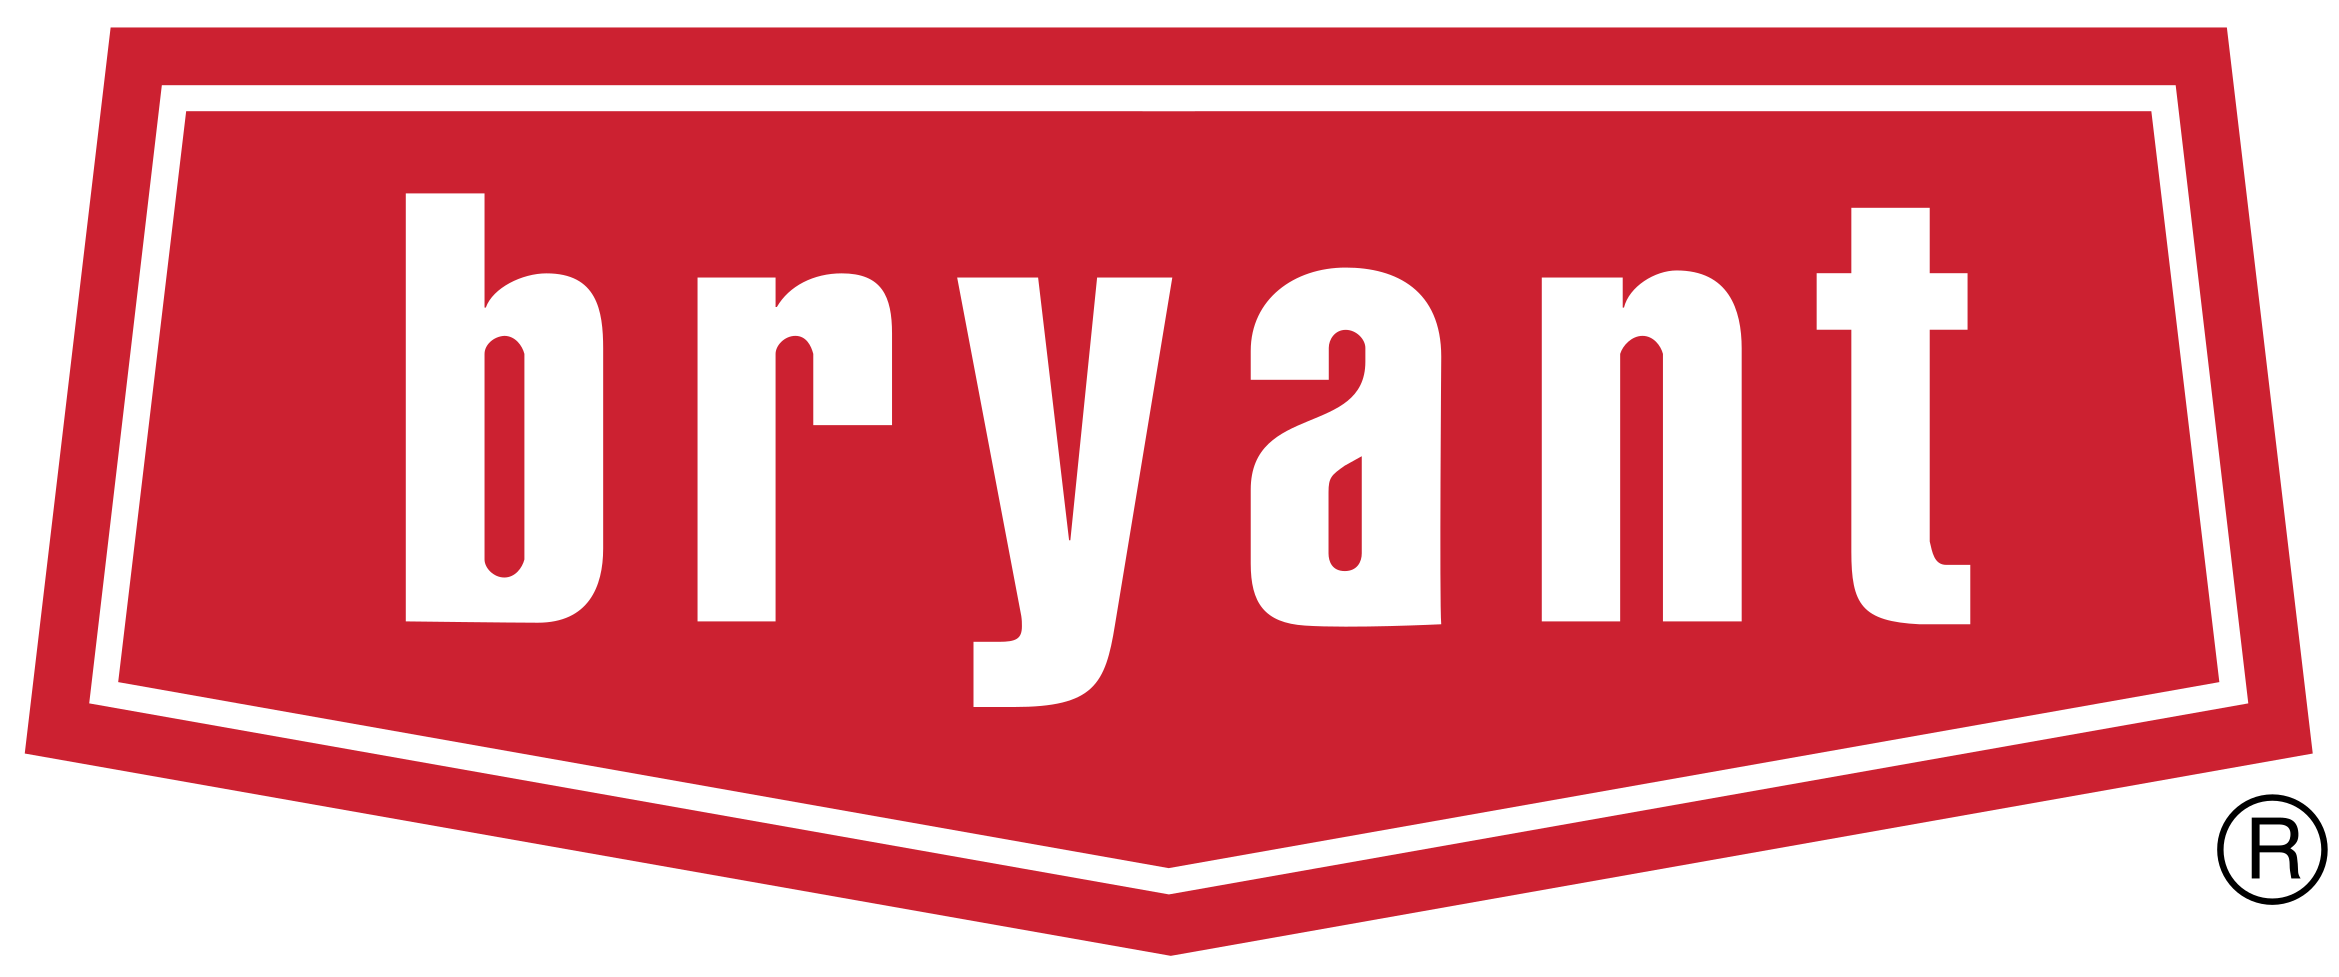 bryant-01-logo-png-transparent-1